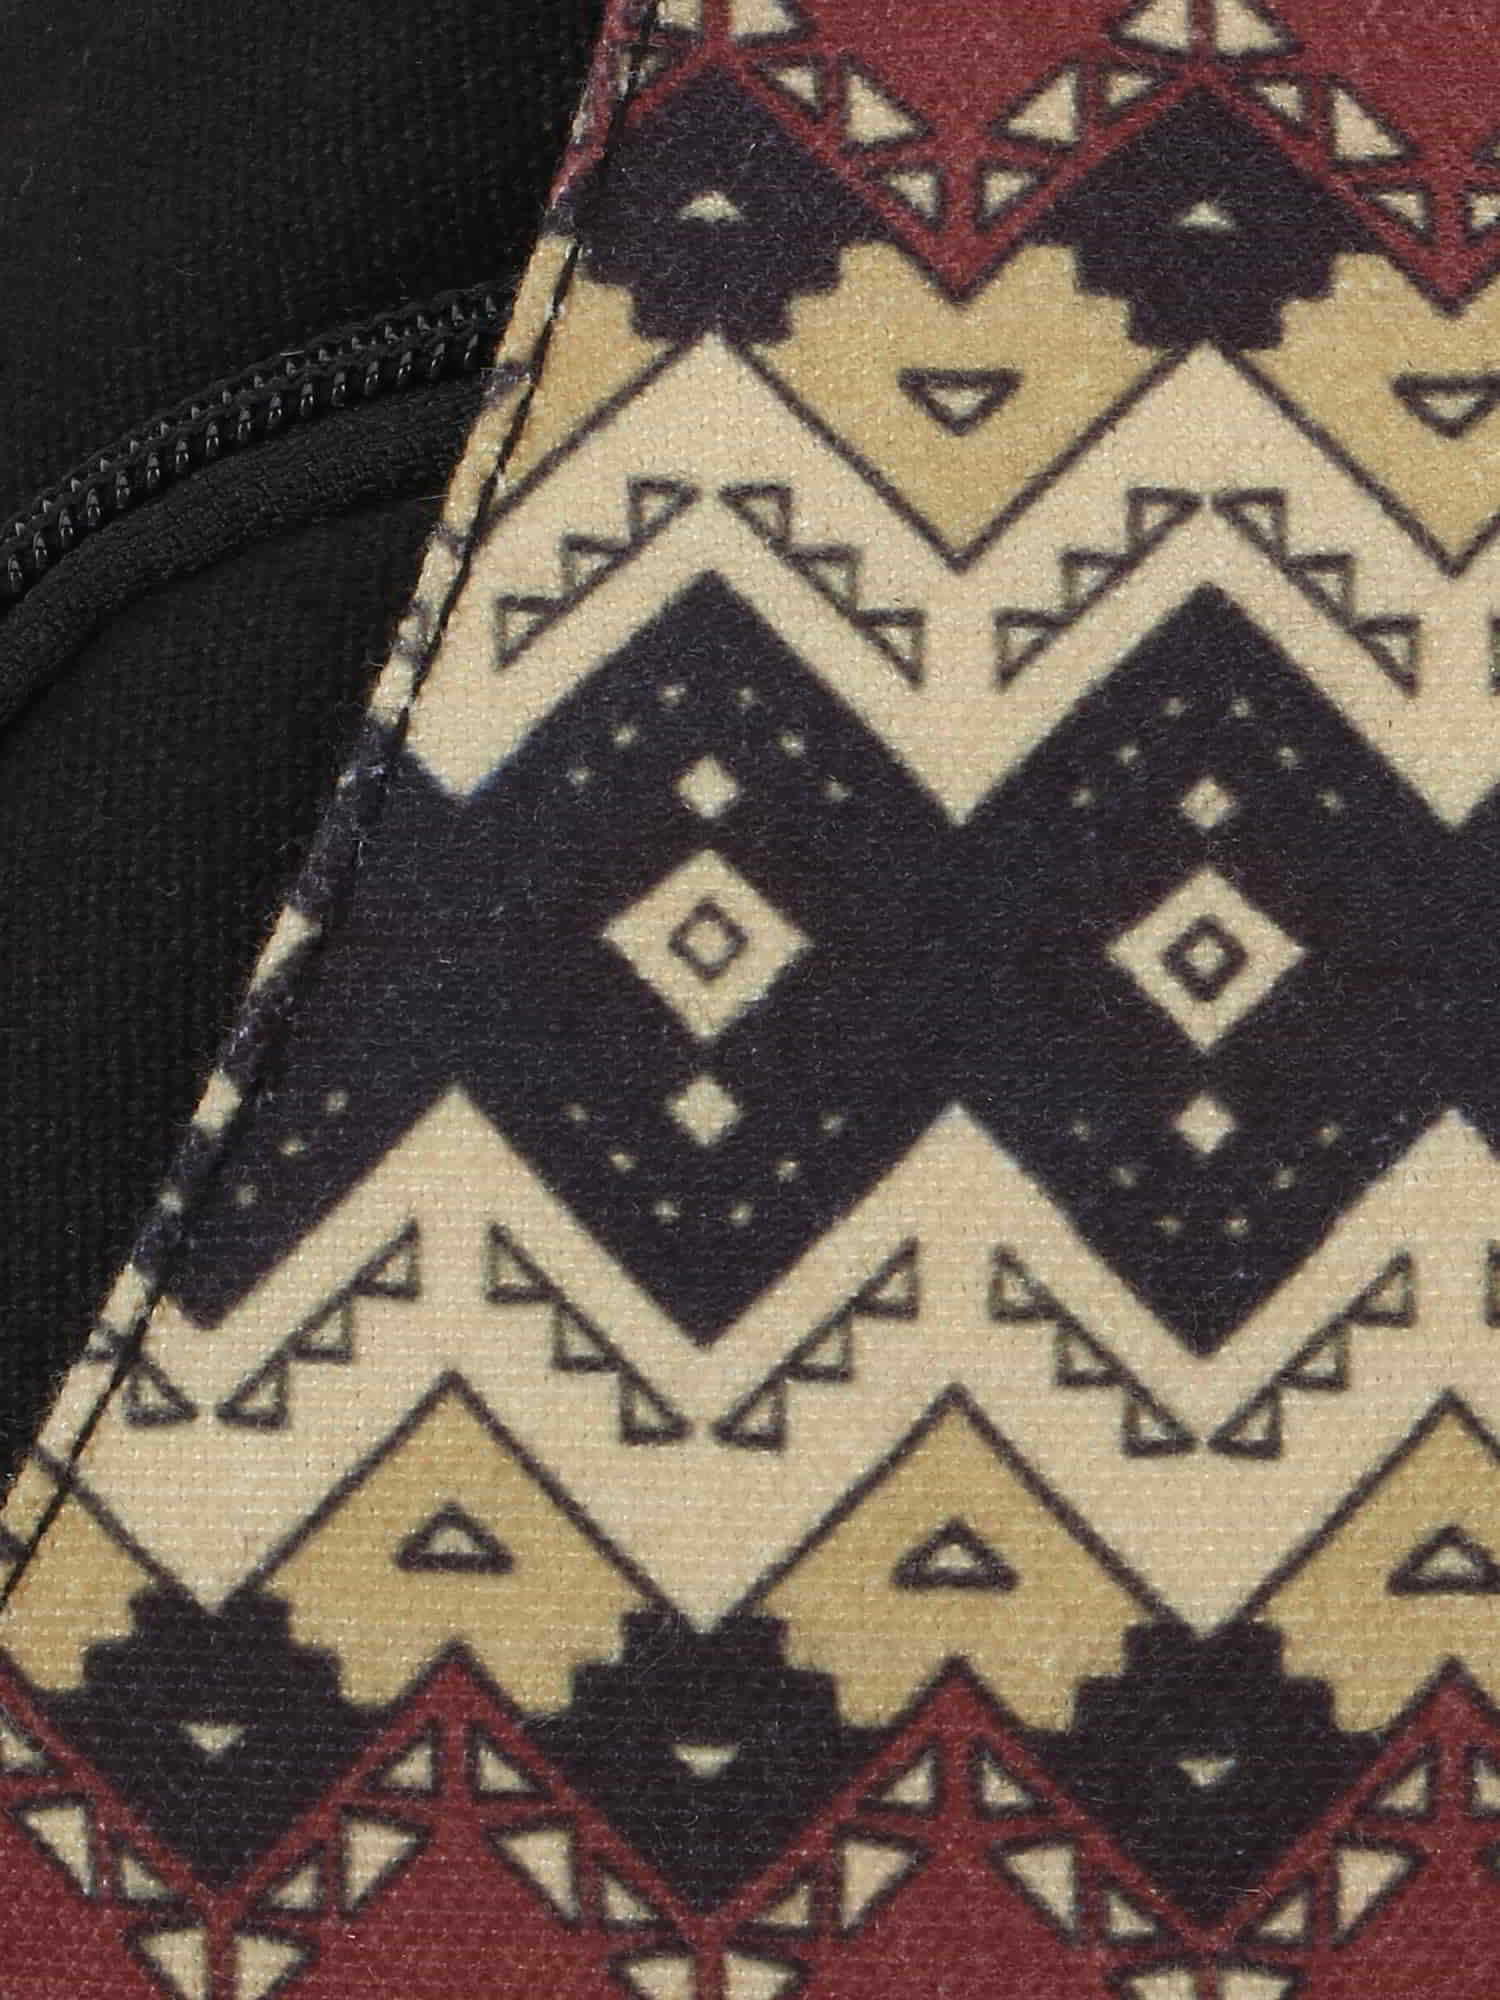 Tribal Striped Digital Printed Polycotton Bodybag